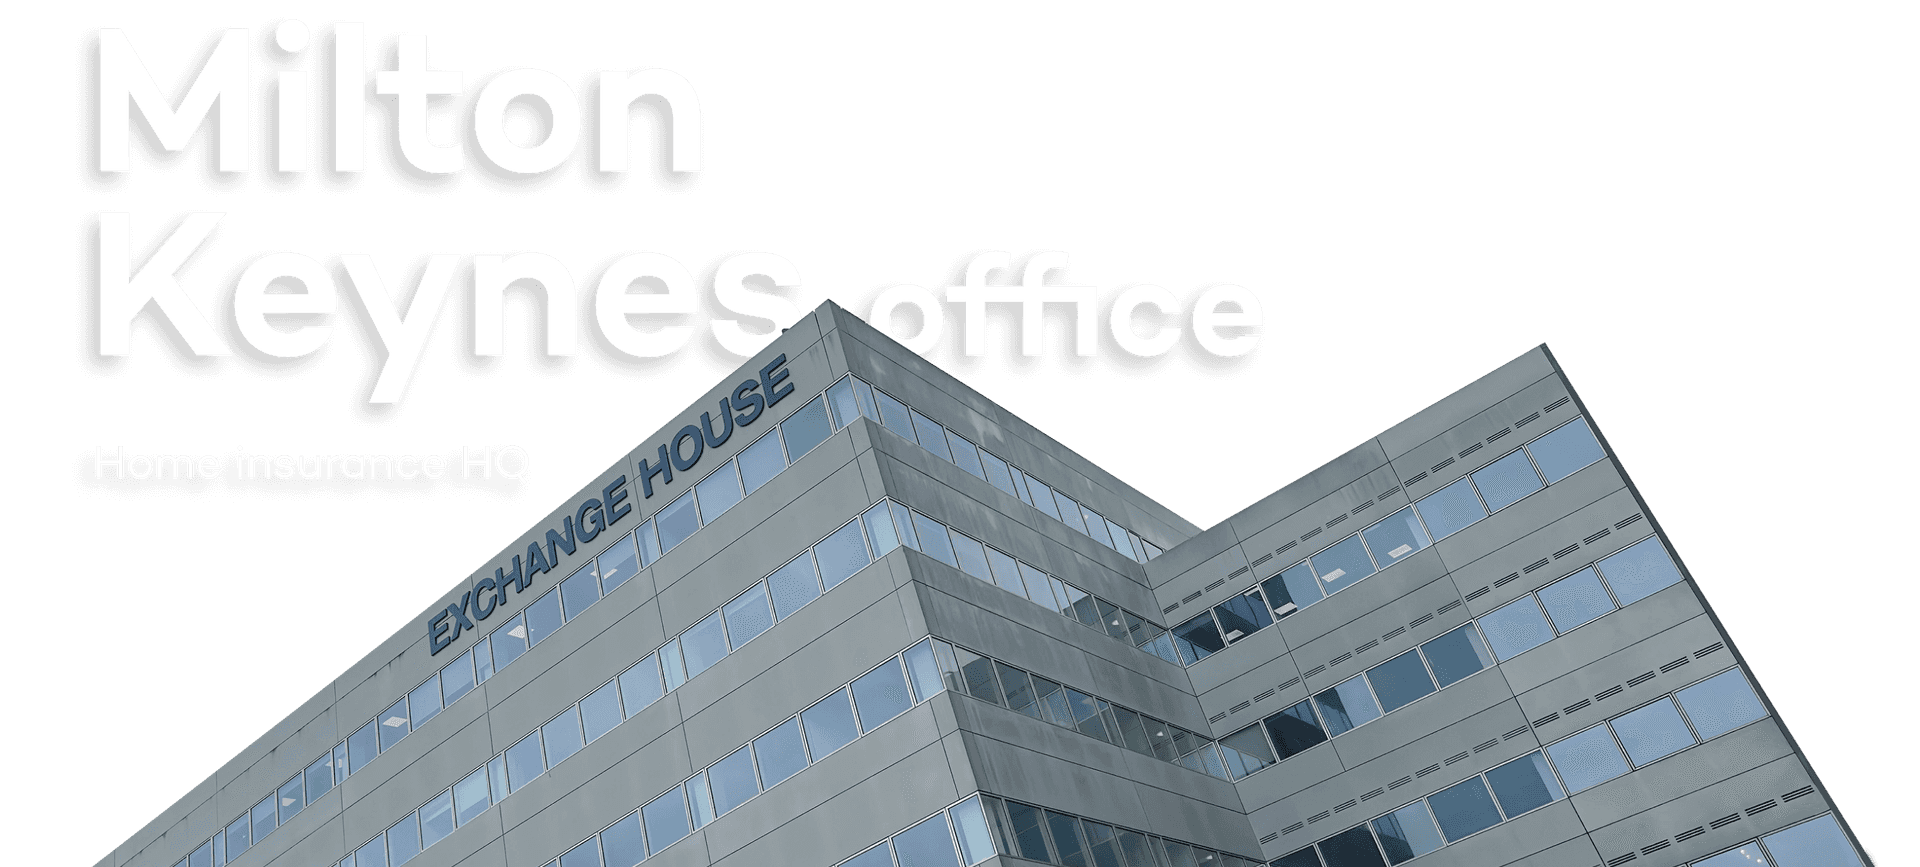 Milton Keynes office. Home insurance HQ